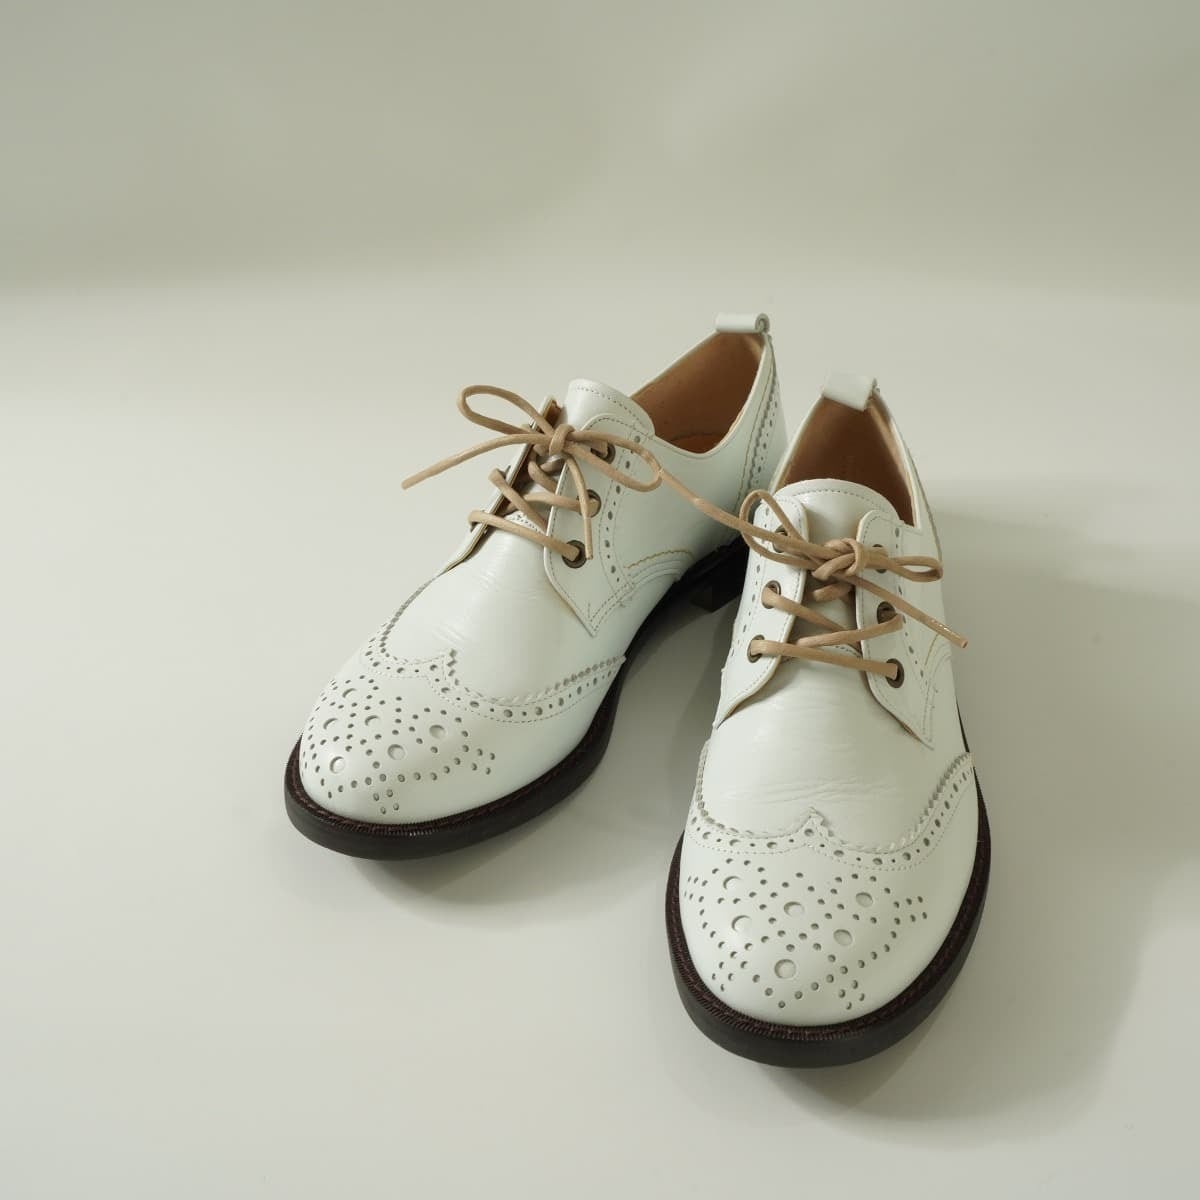 TODAY'S トゥデイズ 日本製 メダリオン シューズ レザー 靴 本革 革靴